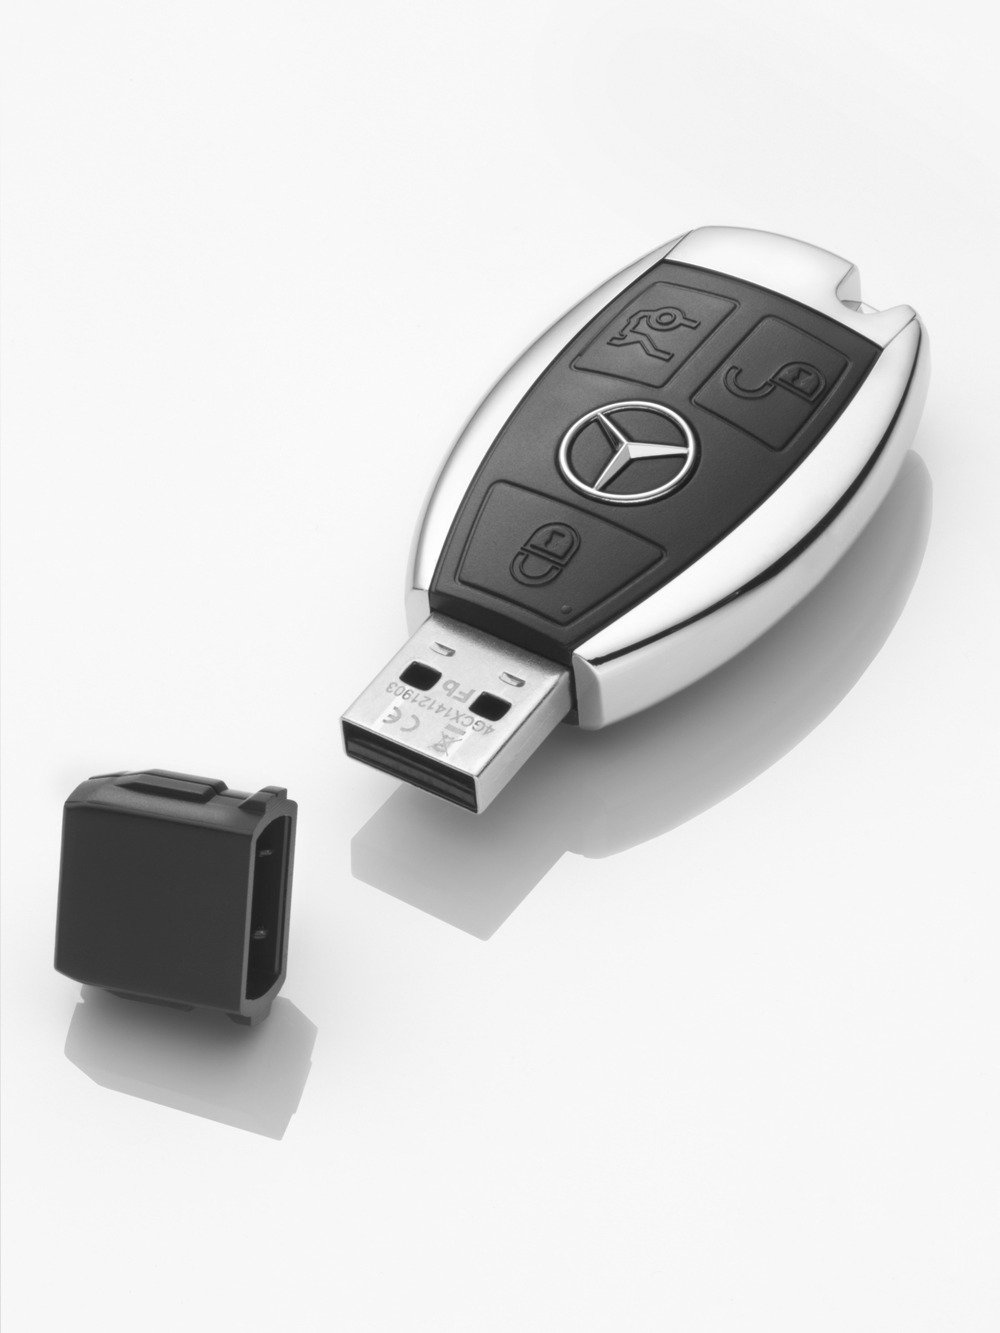 Flash ключ. USB флешка Mercedes Benz. Флешка ключ Мерседес. Флешка 16гб USB тайп. USB 512gb.